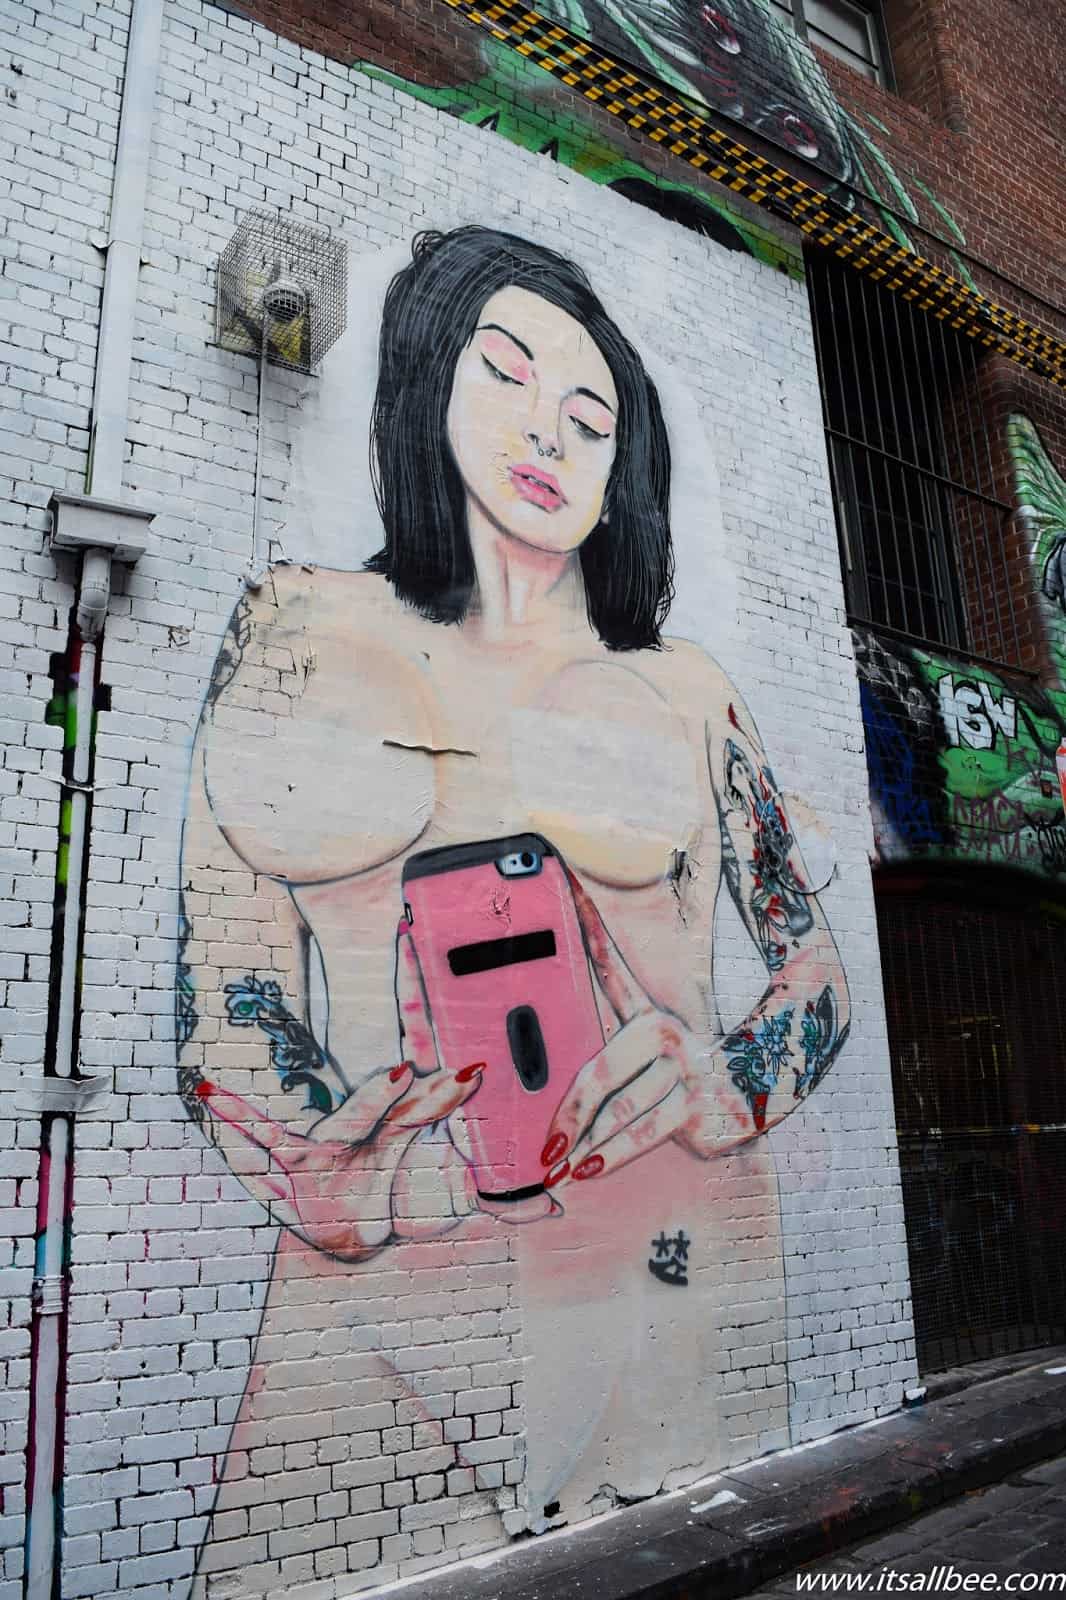 Hosier Lane - Melbourne's Best Spot To Check Out For Street Art